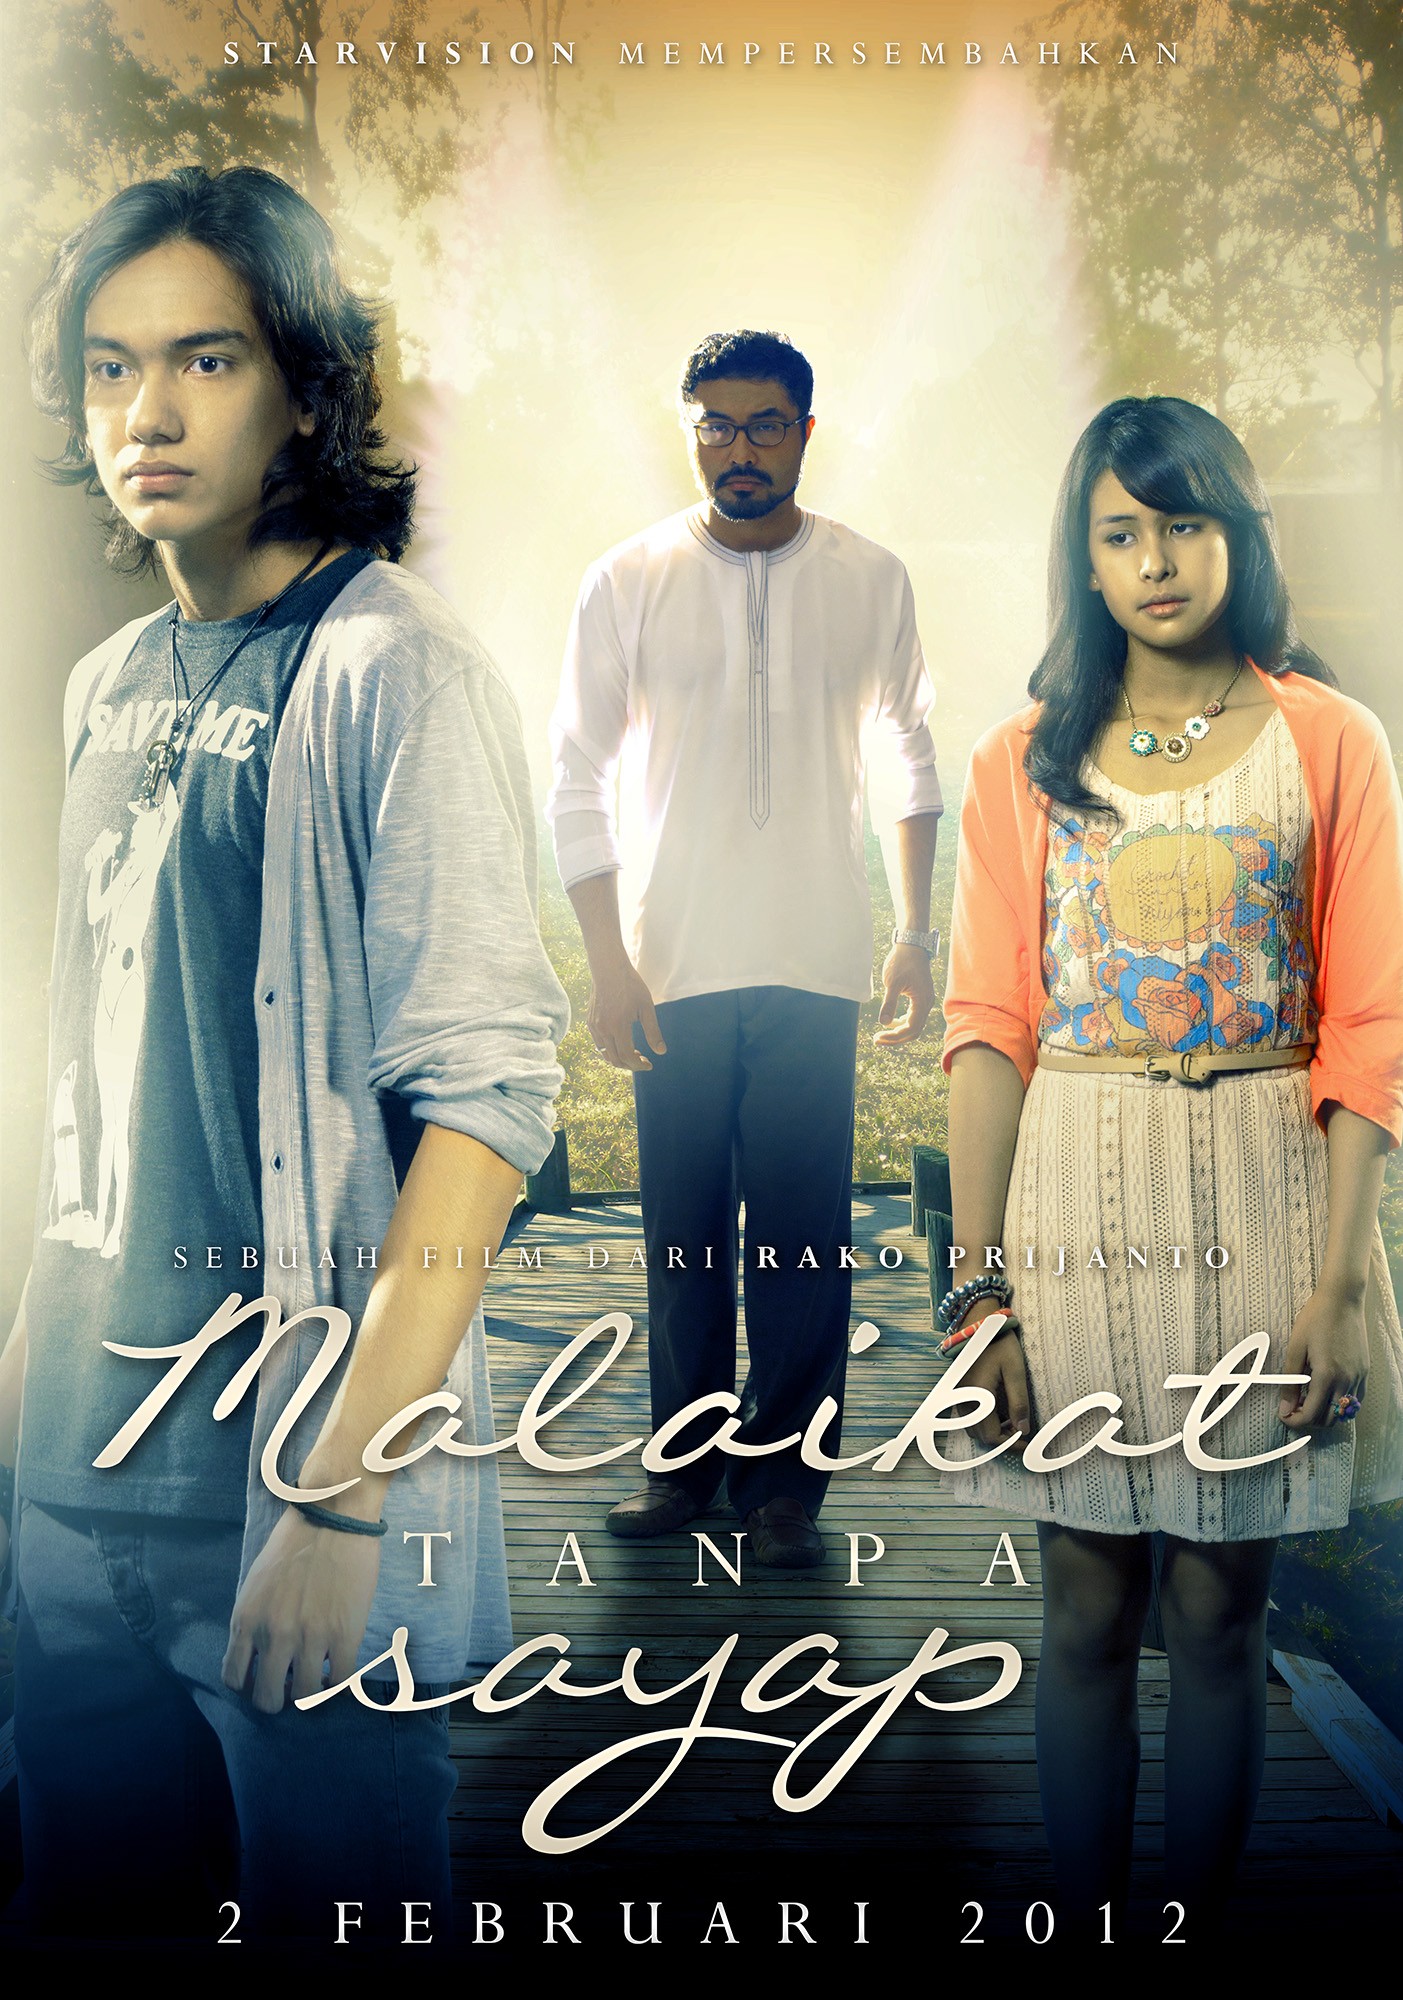 Mega Sized Movie Poster Image for Malaikat tanpa sayap (#1 of 2)